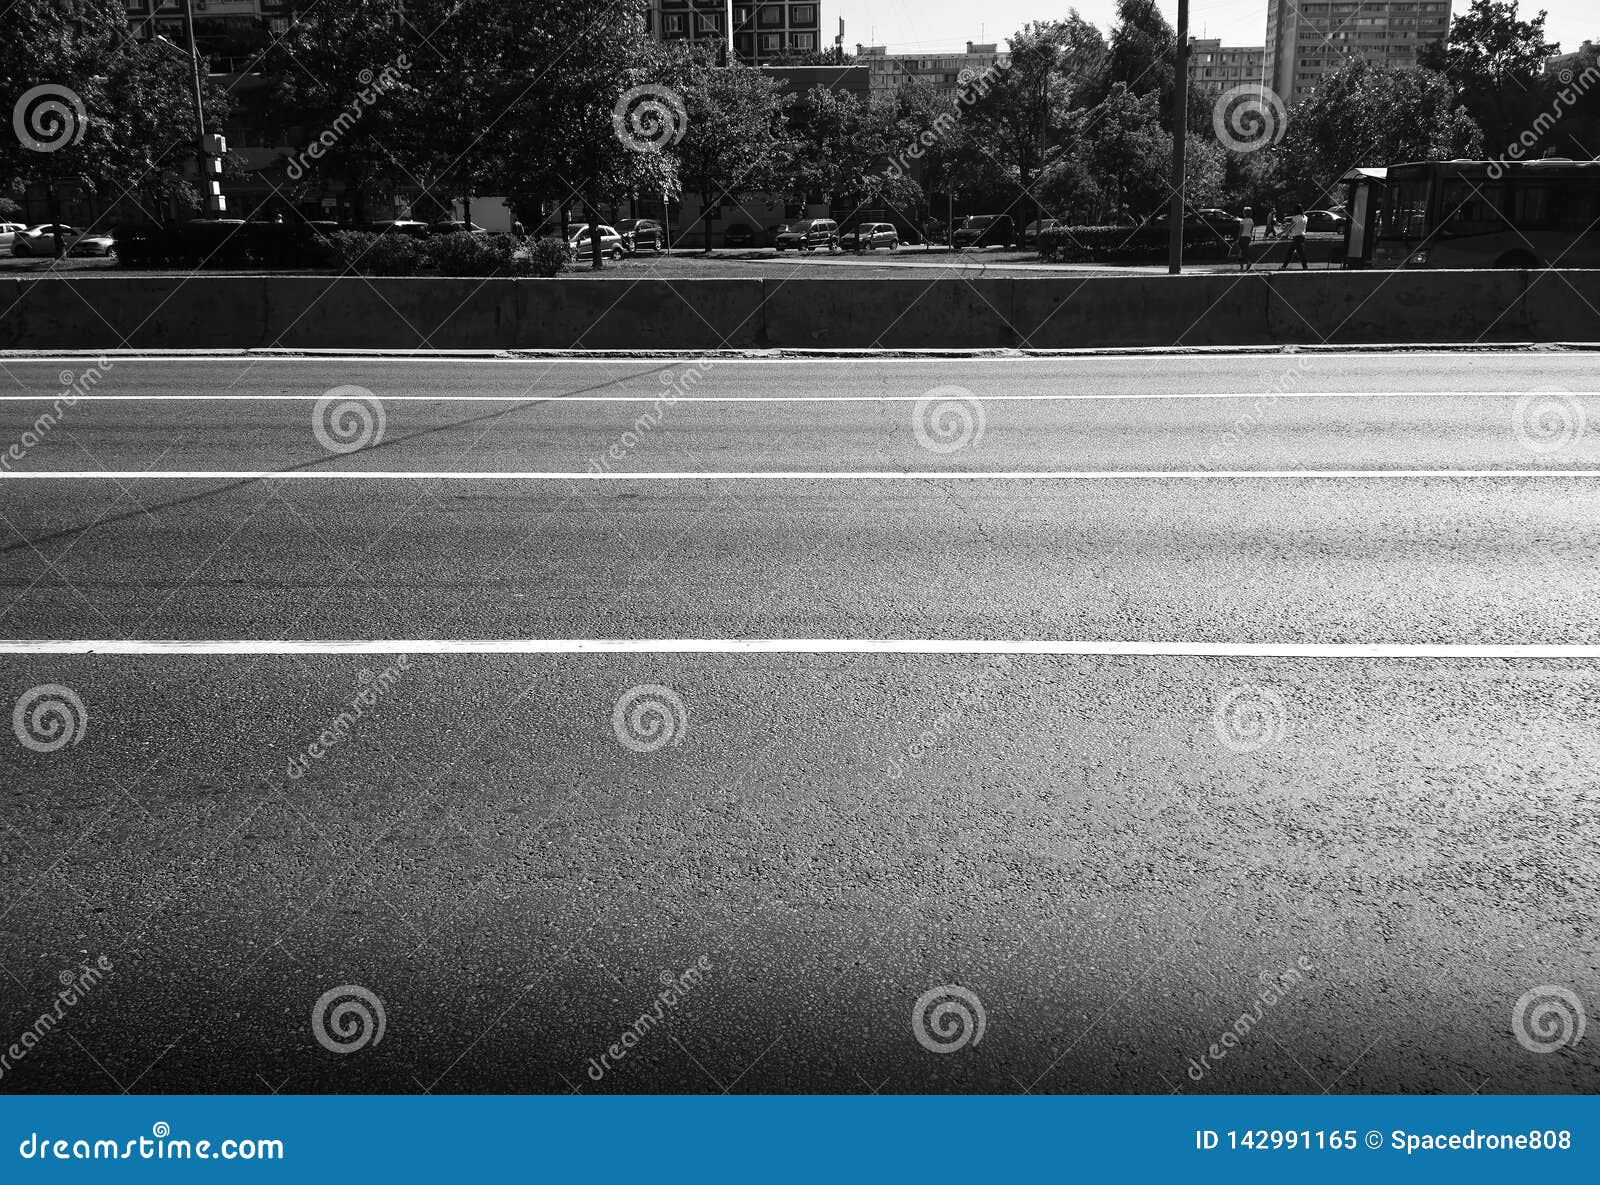 Horizontal Black and White City Road Background Stock Image ...